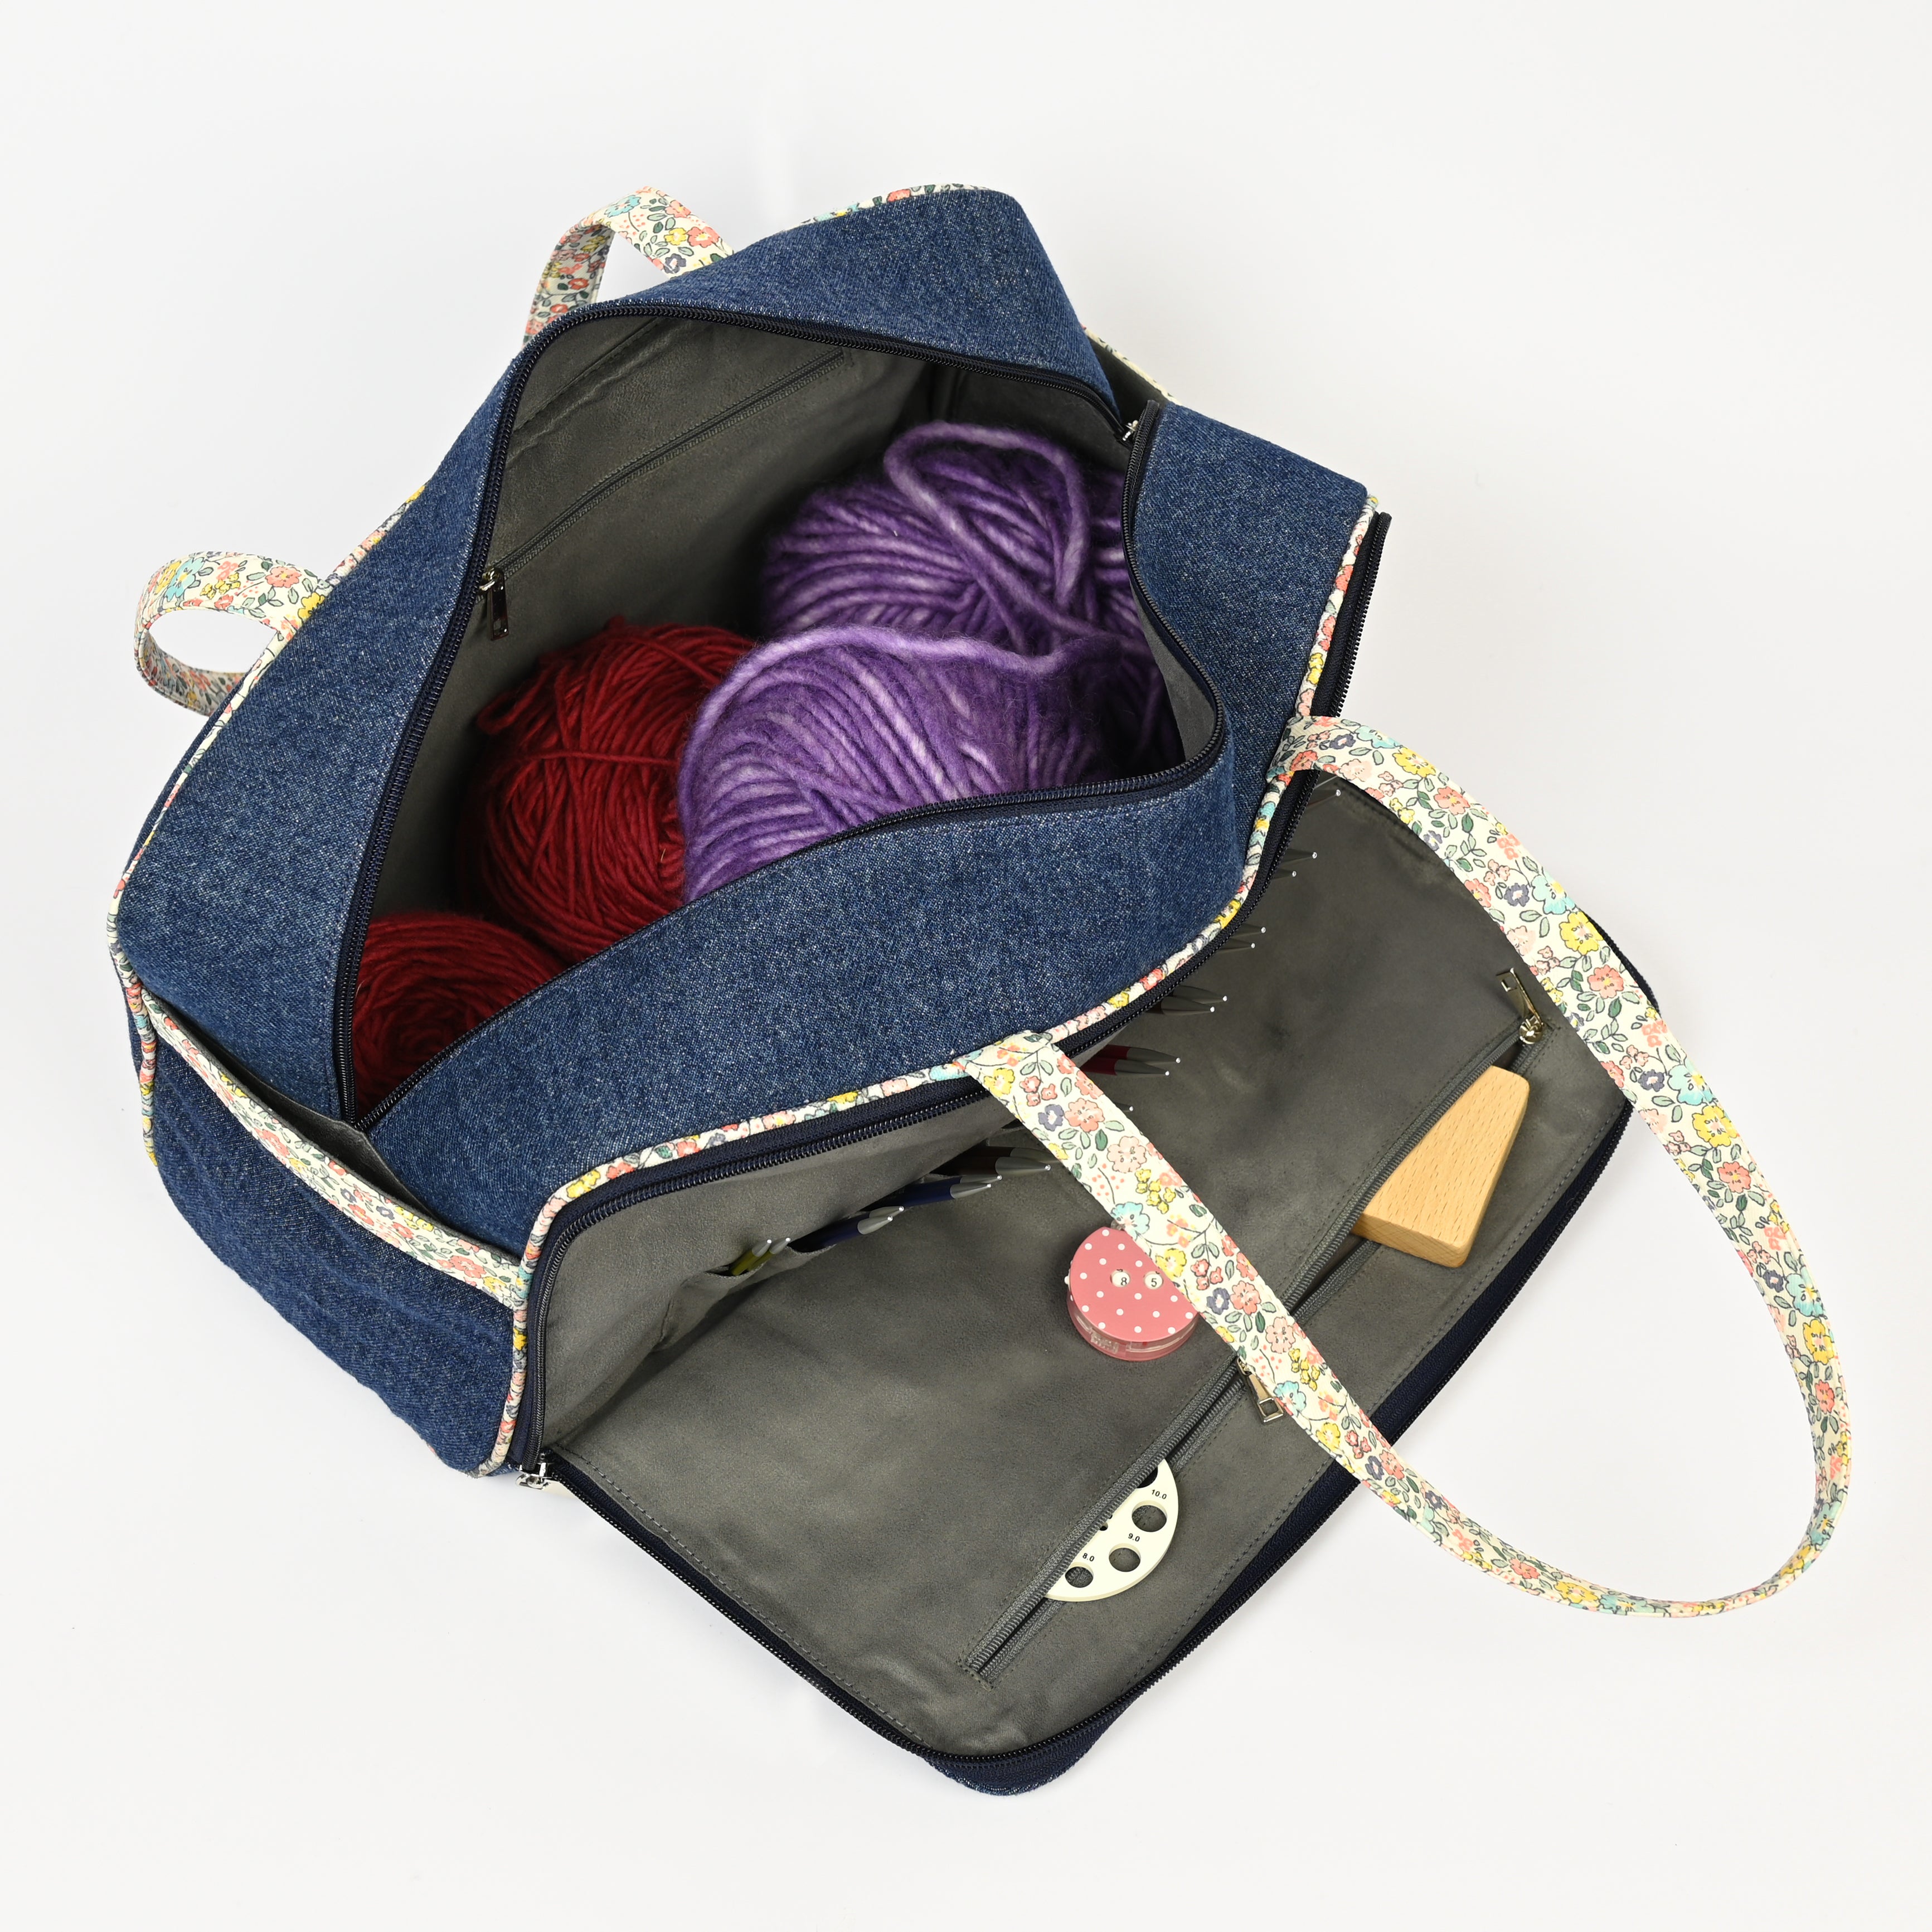 Knitpro Duffle Bag